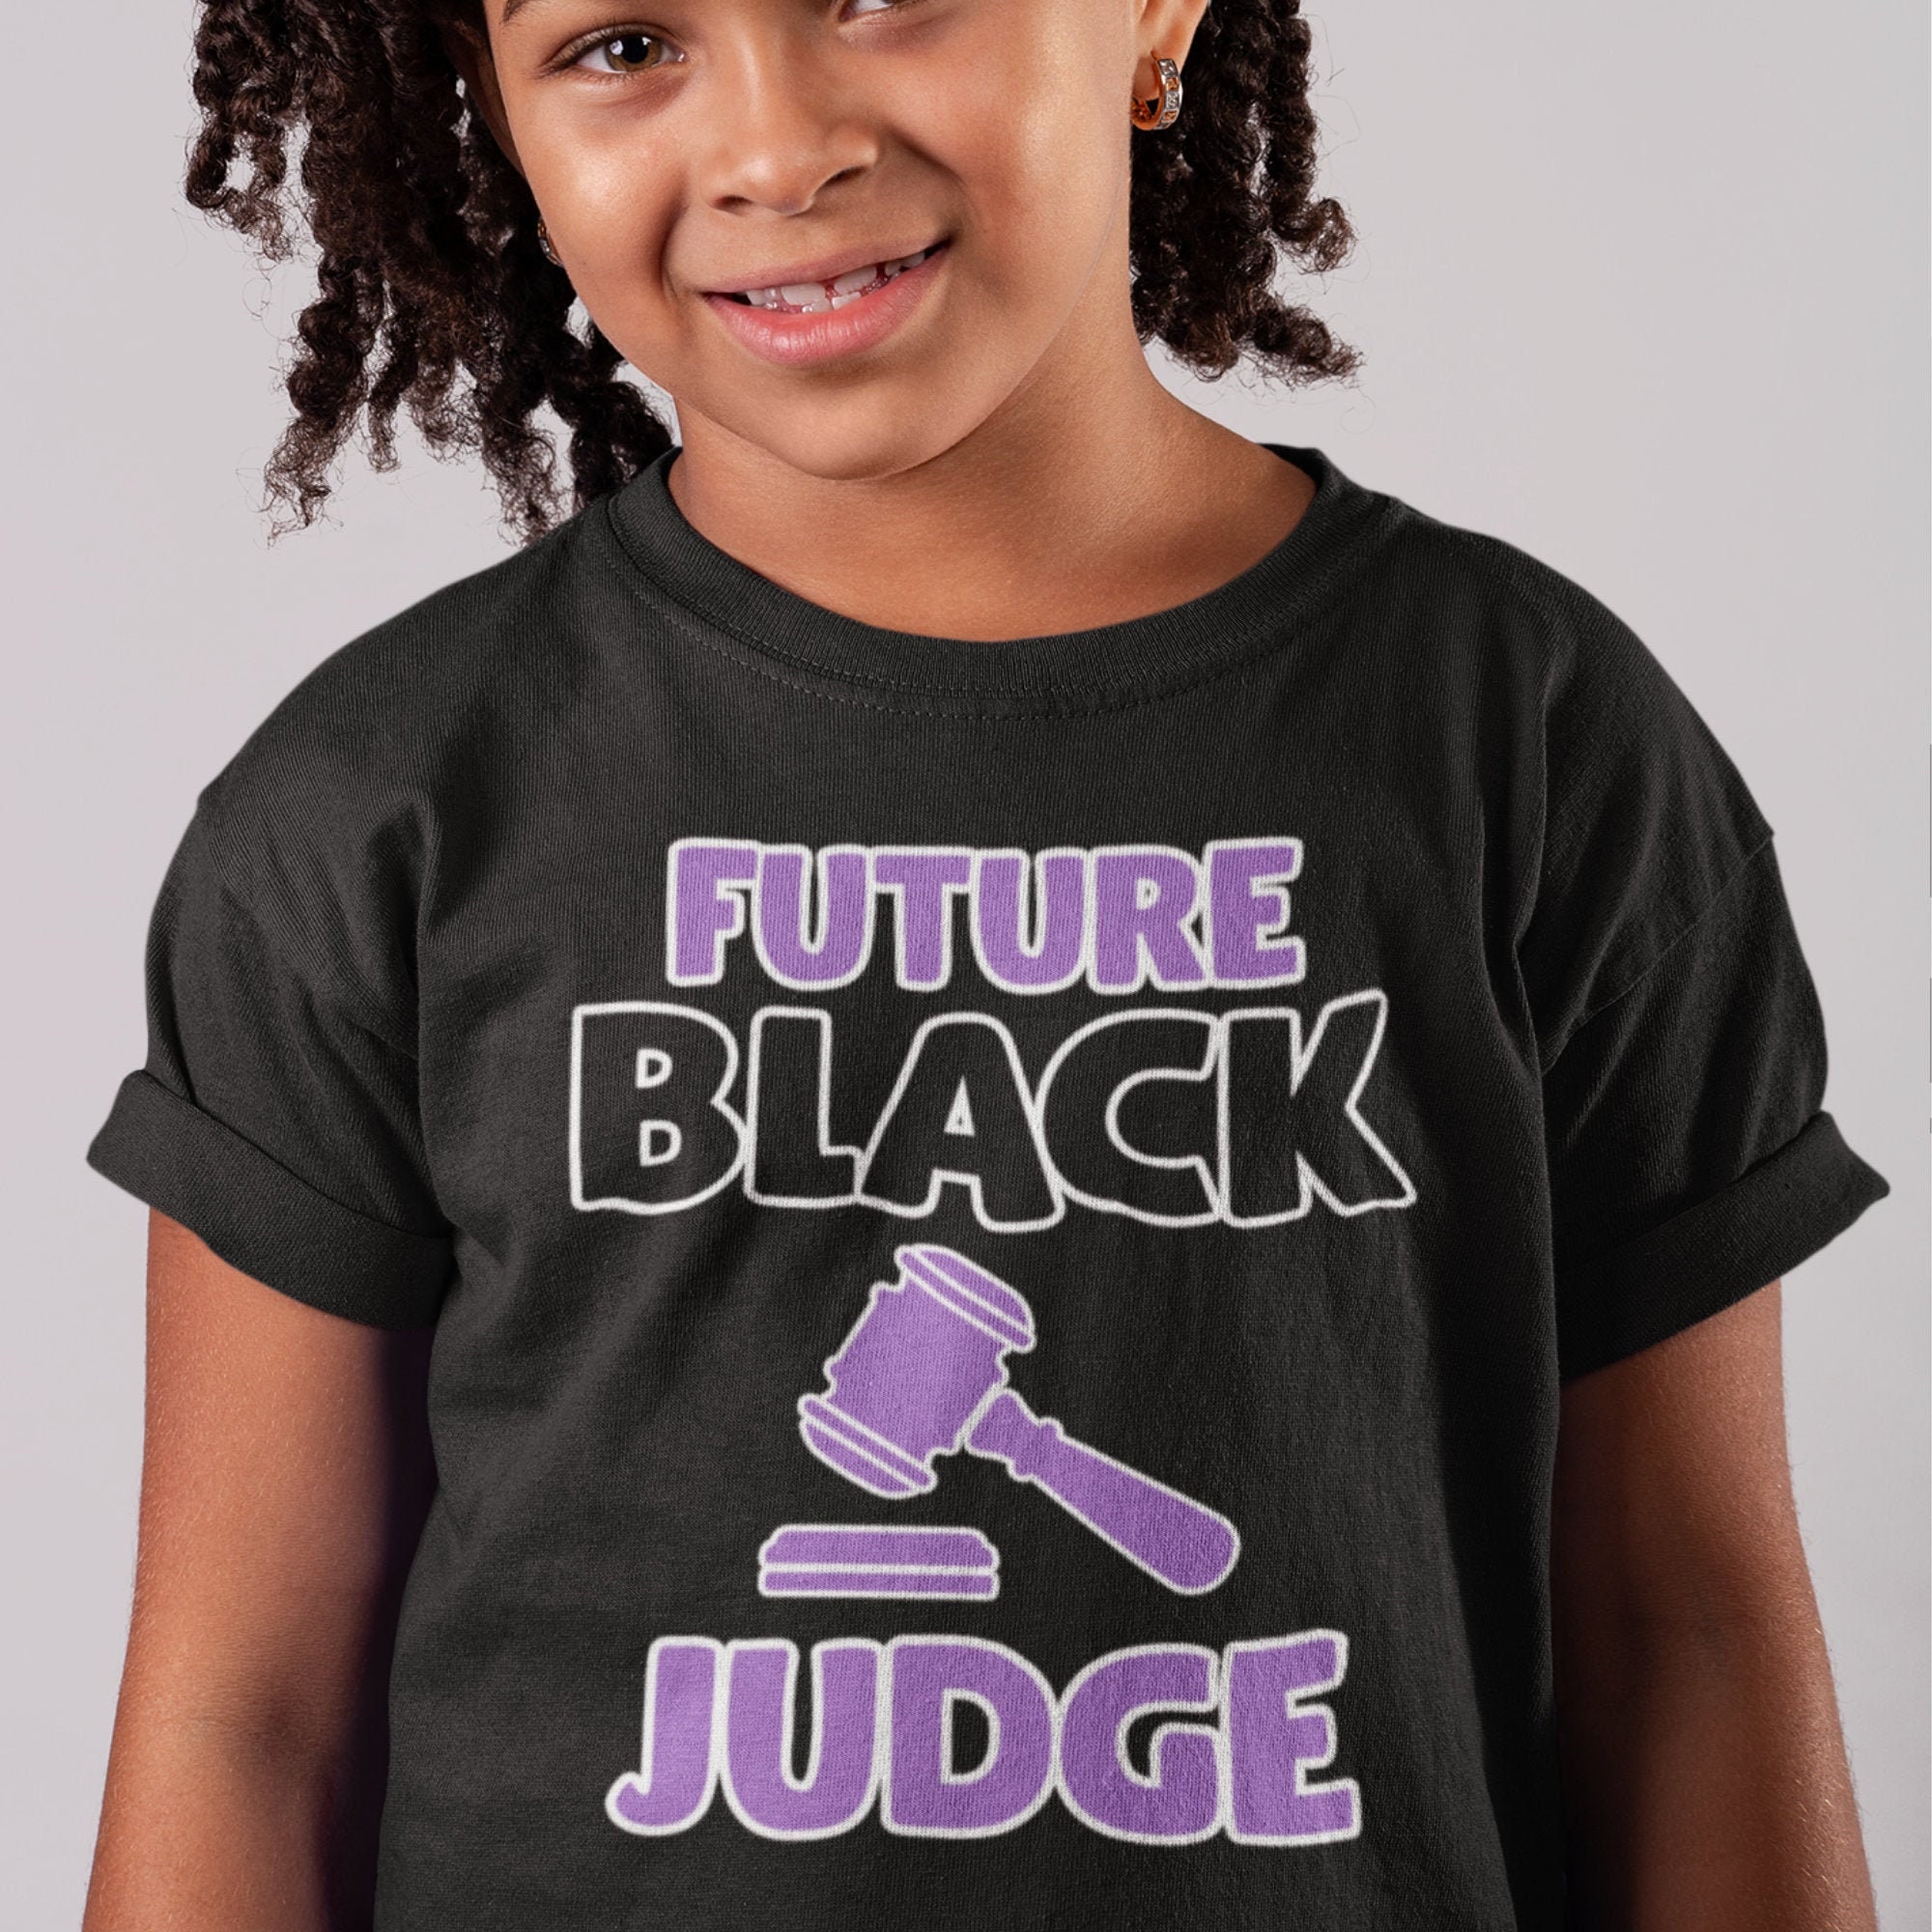 Kids Judge Shirt Future Black Judge Black Youth | Etsy